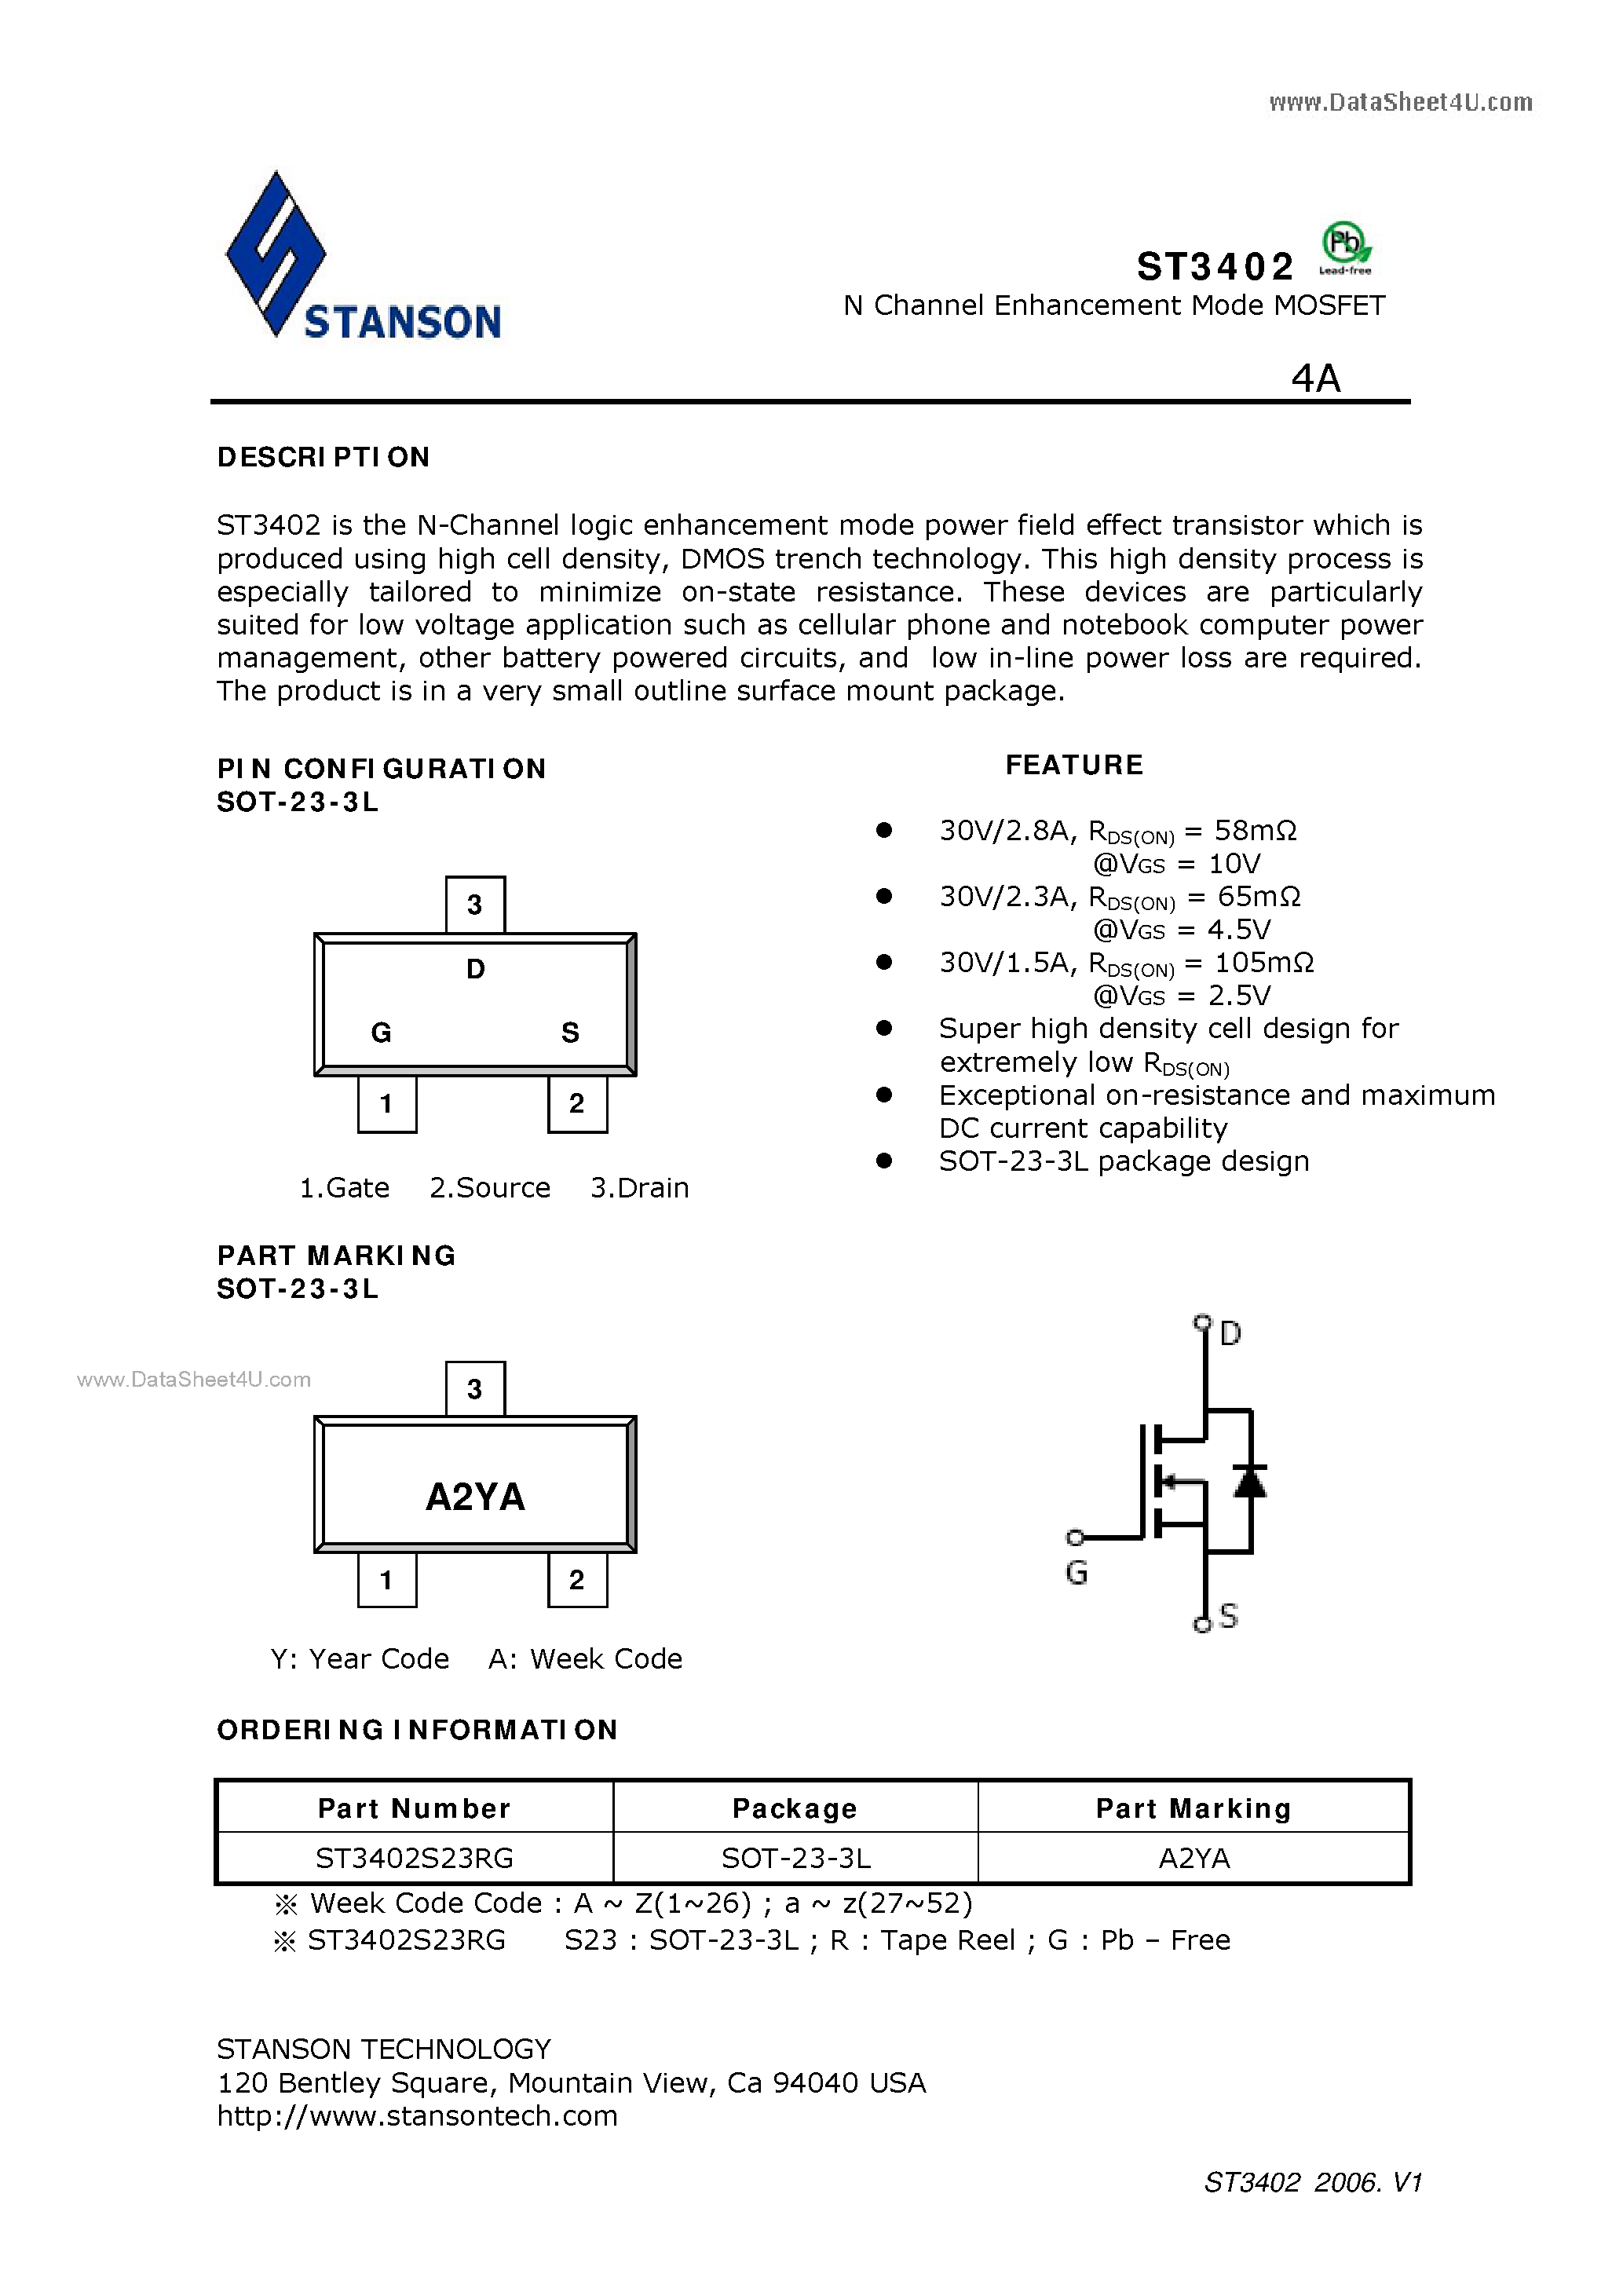 Даташит ST3402 - N Channel Enhancement Mode MOSFET страница 1